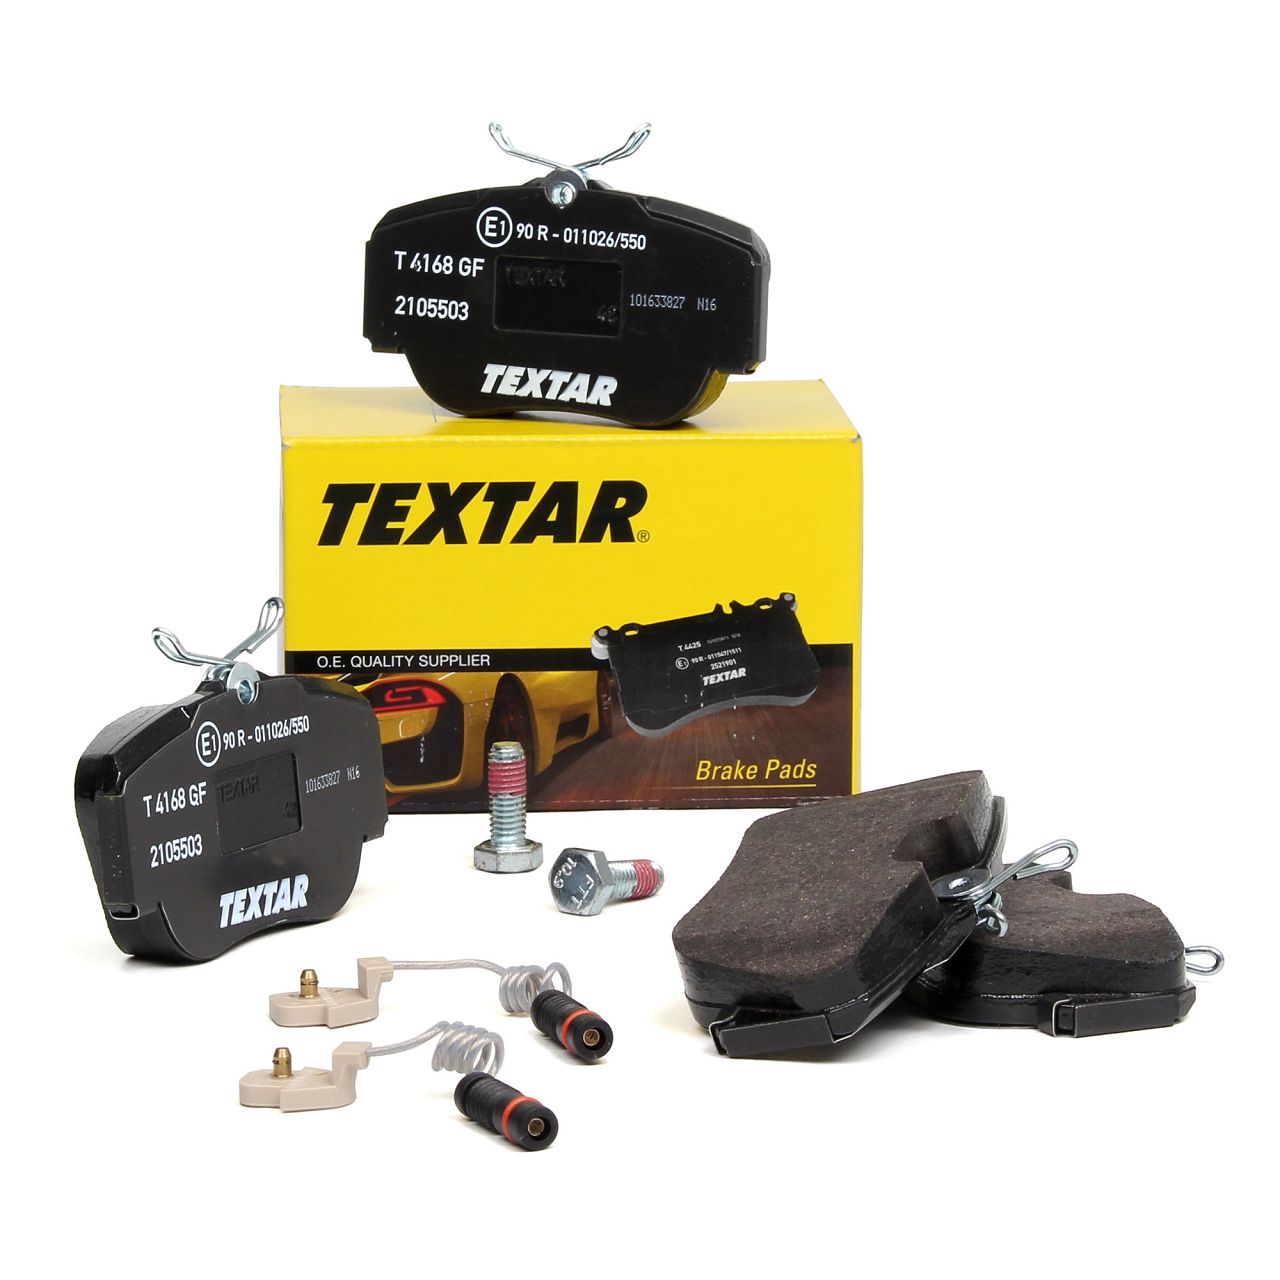 TEXTAR 2105503 Bremsbeläge + Wako MERCEDES 190 W201 2.0 E1.8/2.0/2.3/2.6 D2.0 D2.5 vorne